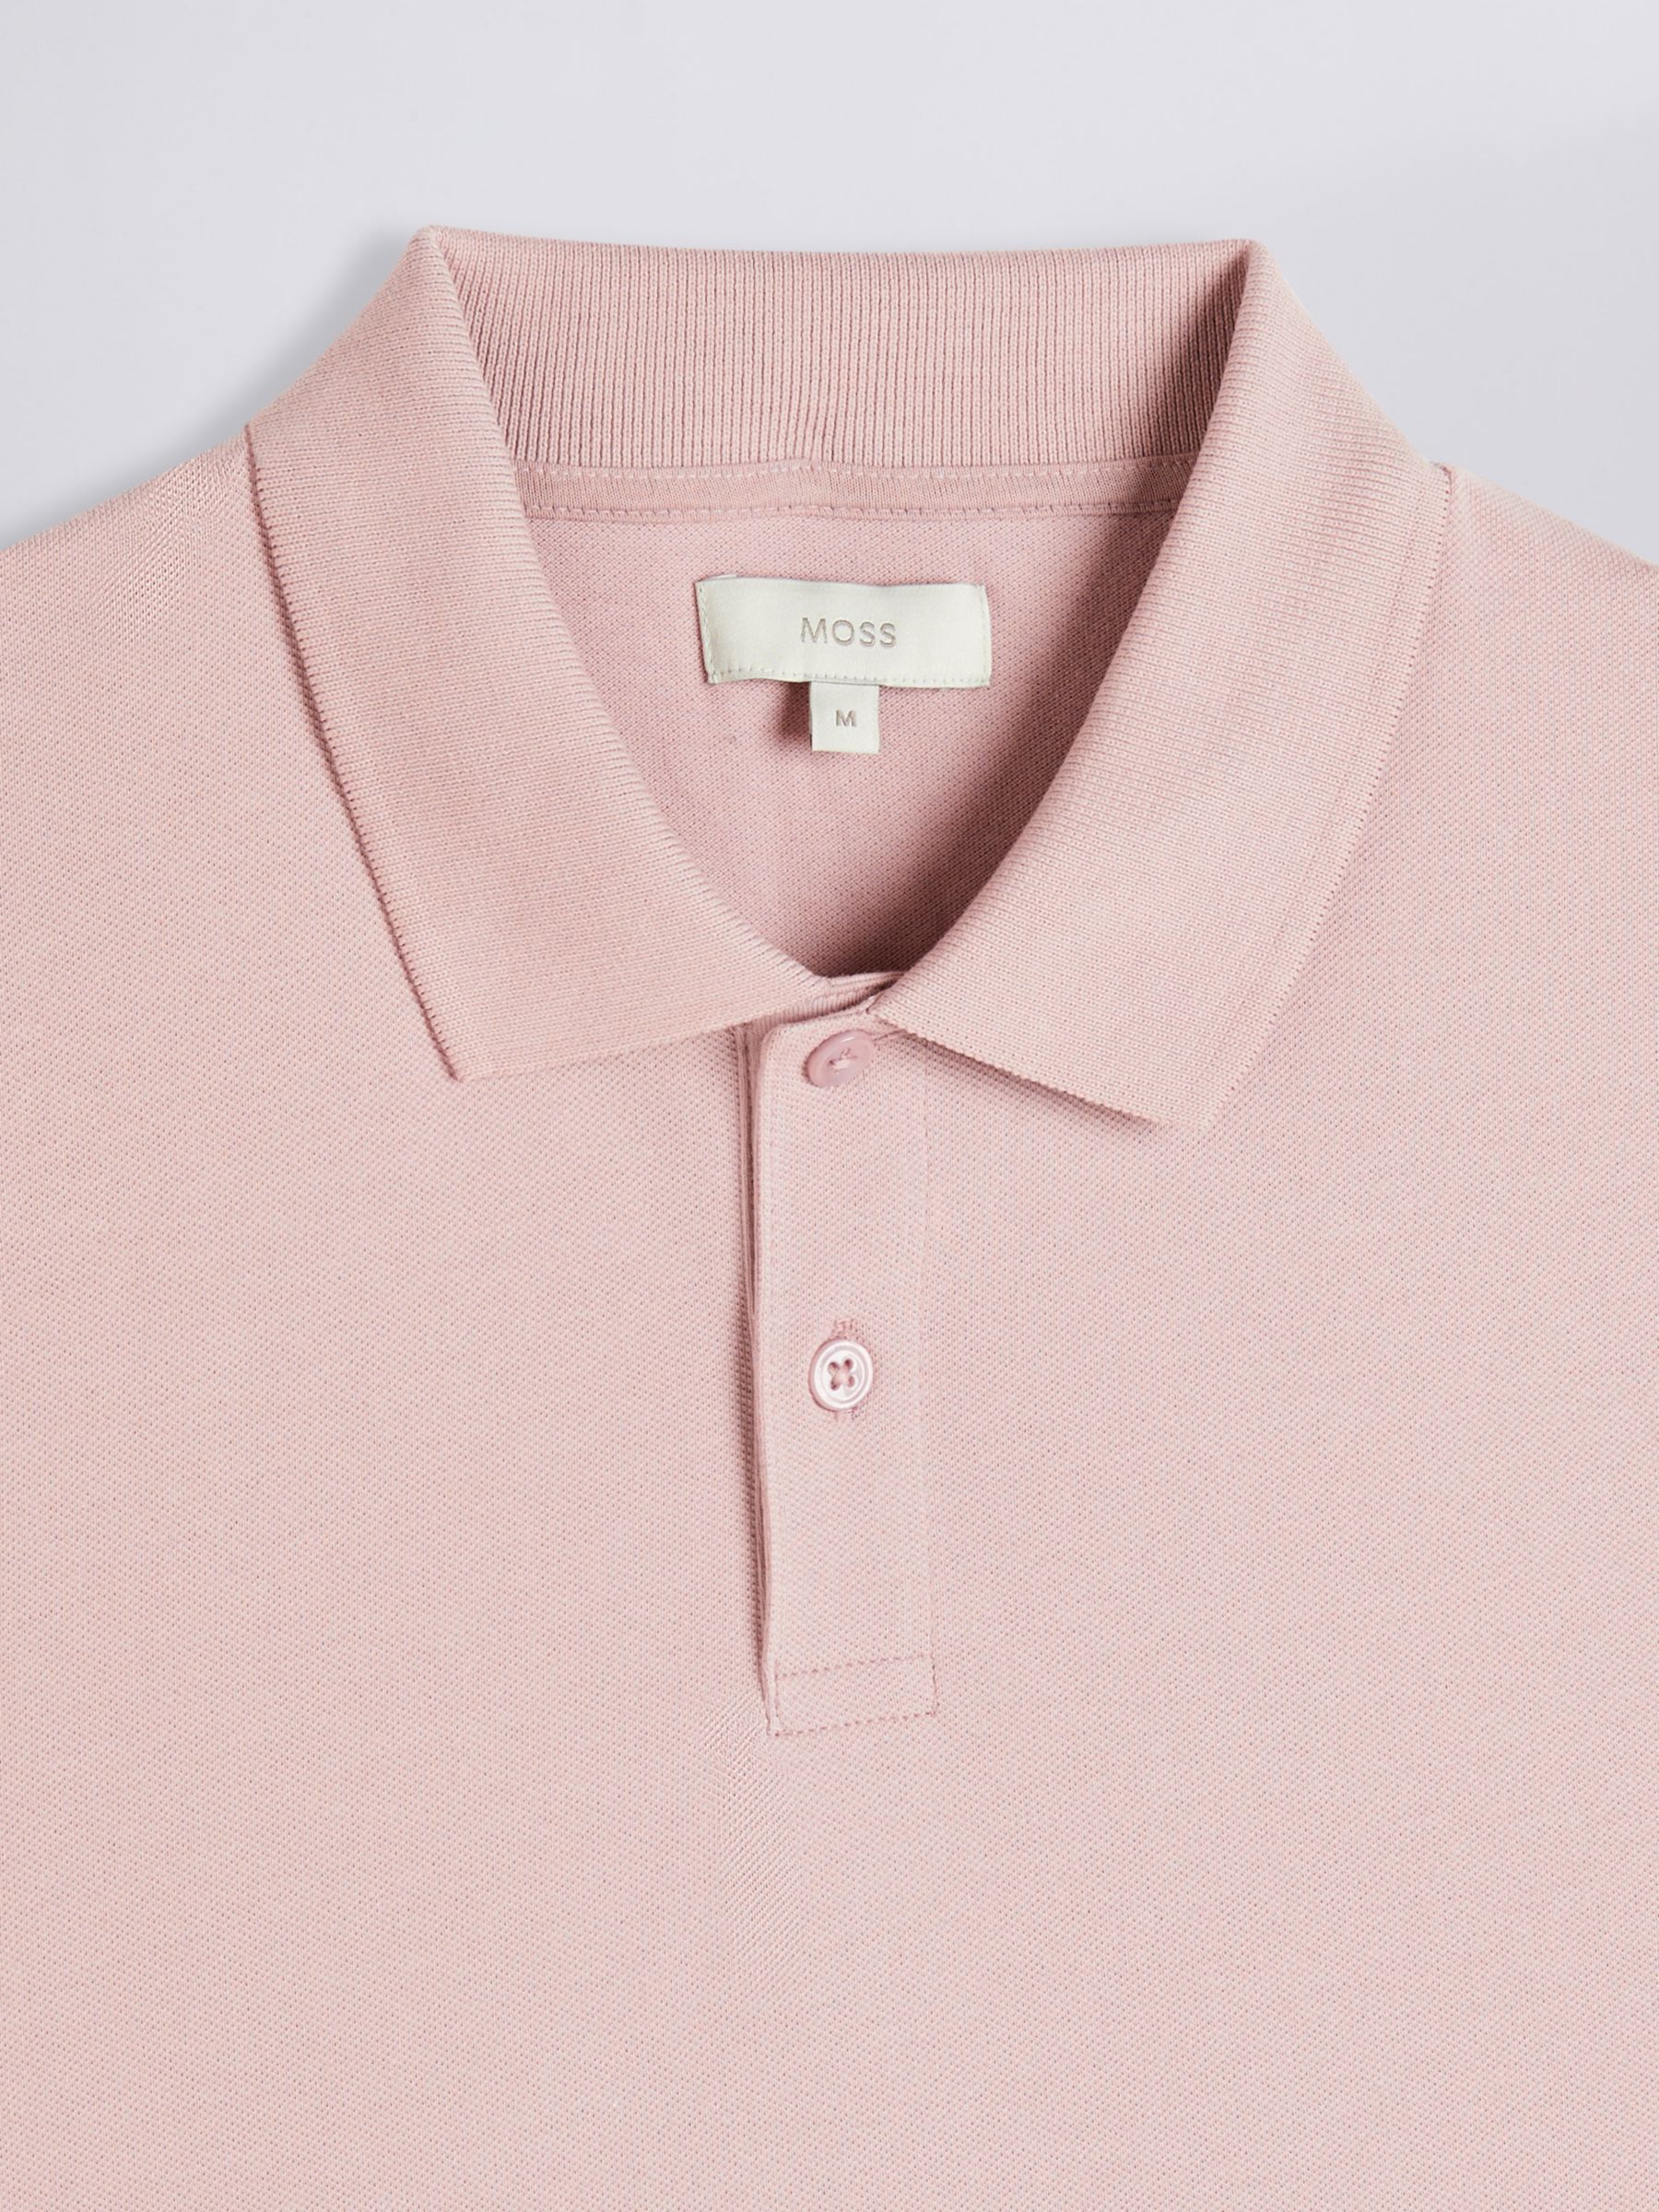 Moss Pique Short Sleeve Polo Shirt, Dusky Pink at John Lewis & Partners